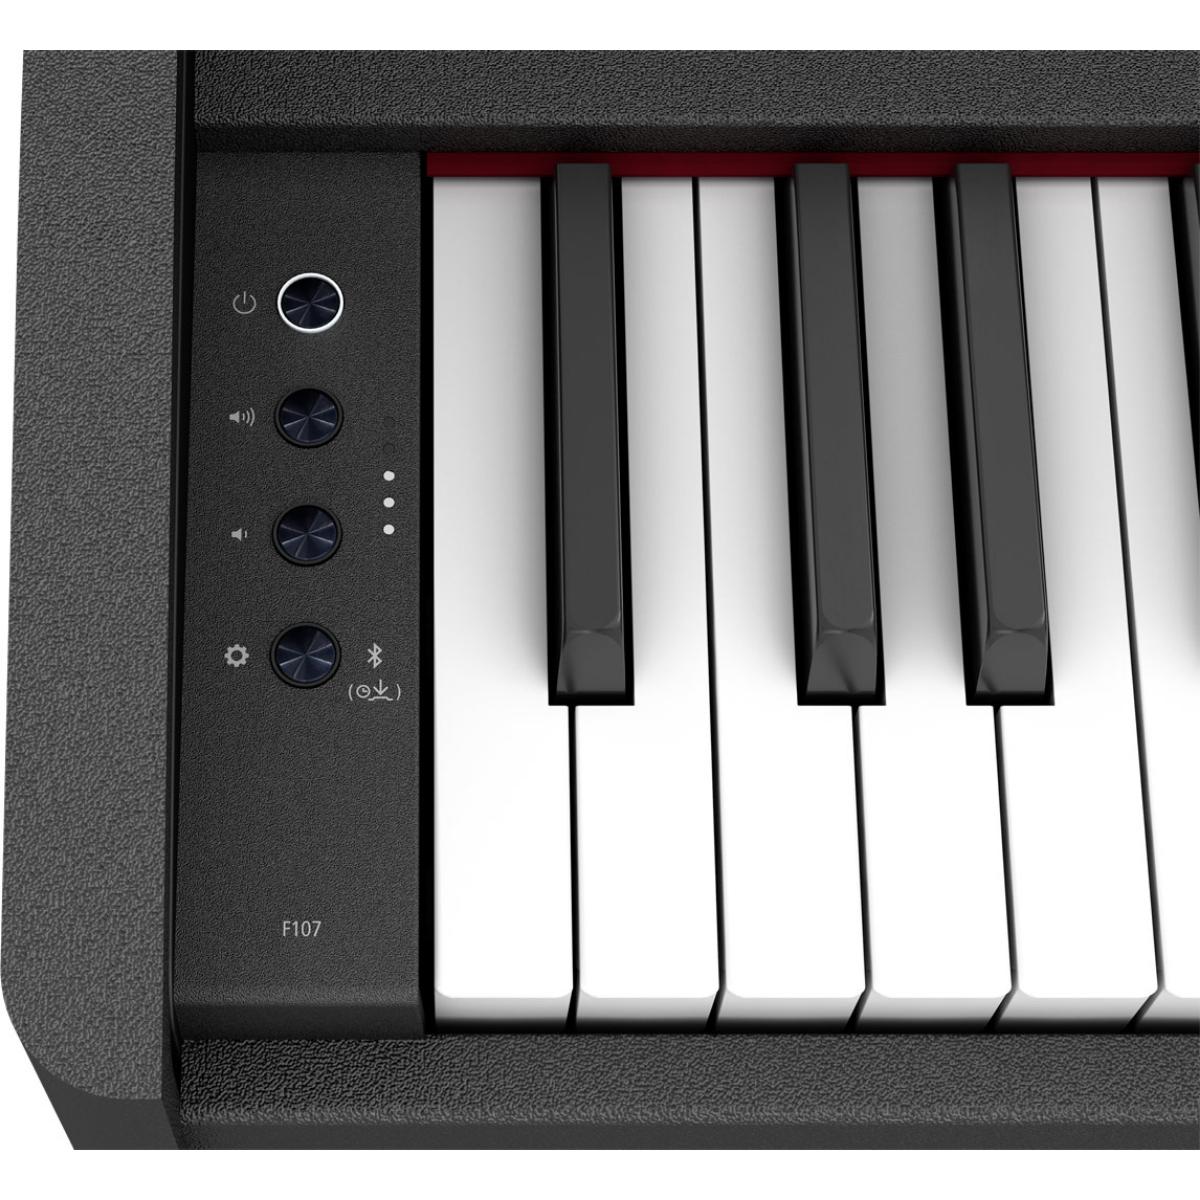 Roland F107 Compact Digital Piano